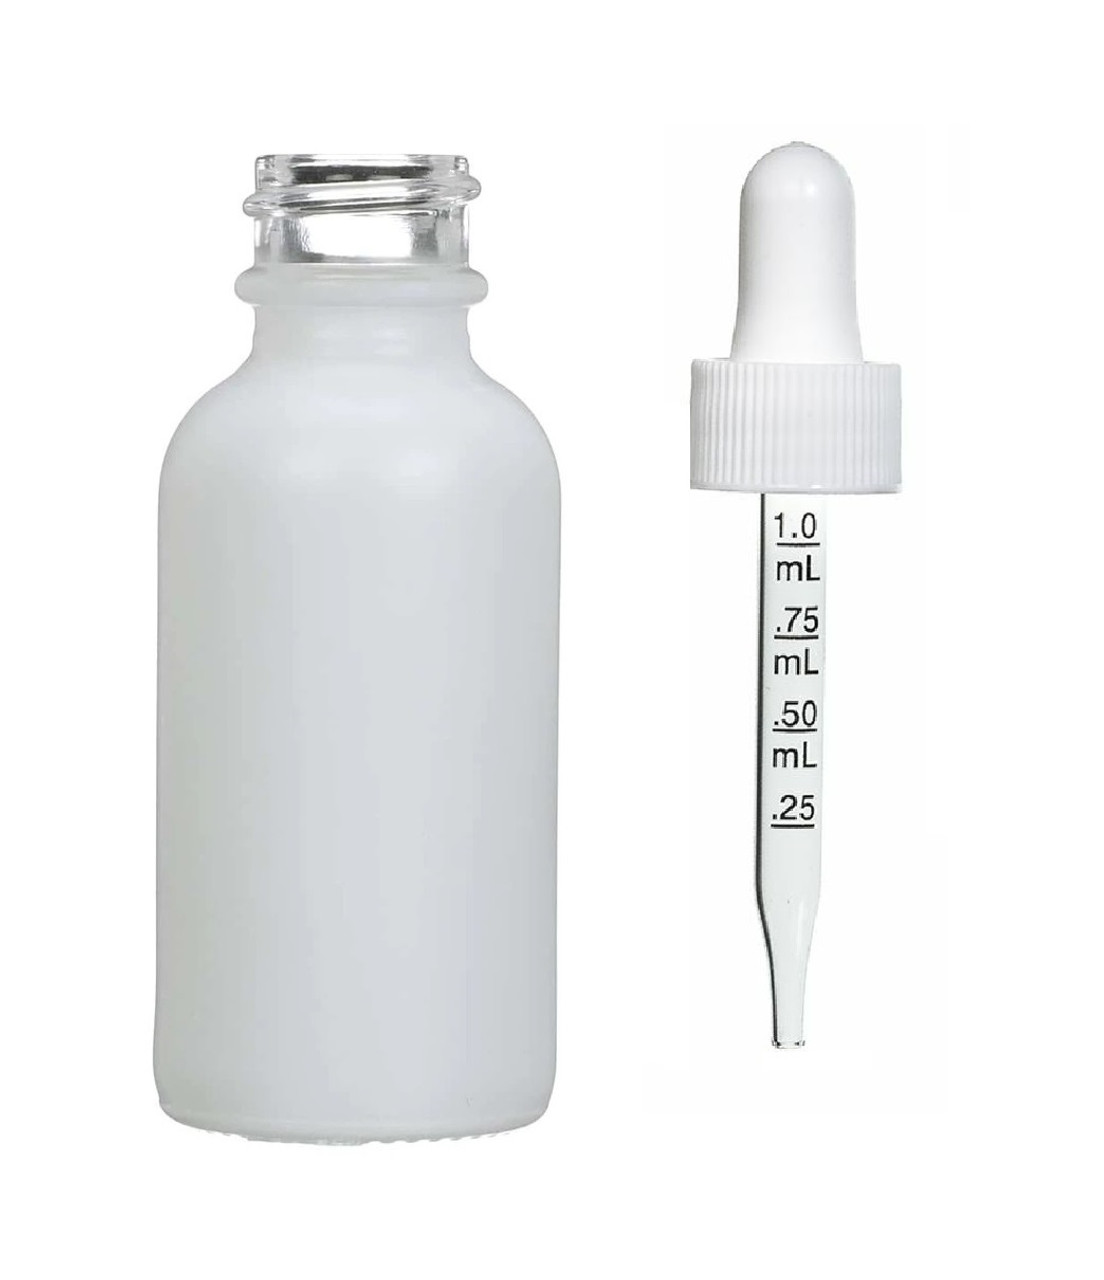 30ml(1oz) Matte White Opaque Glass Dropper Bottle - 309 Count ($0.13/U